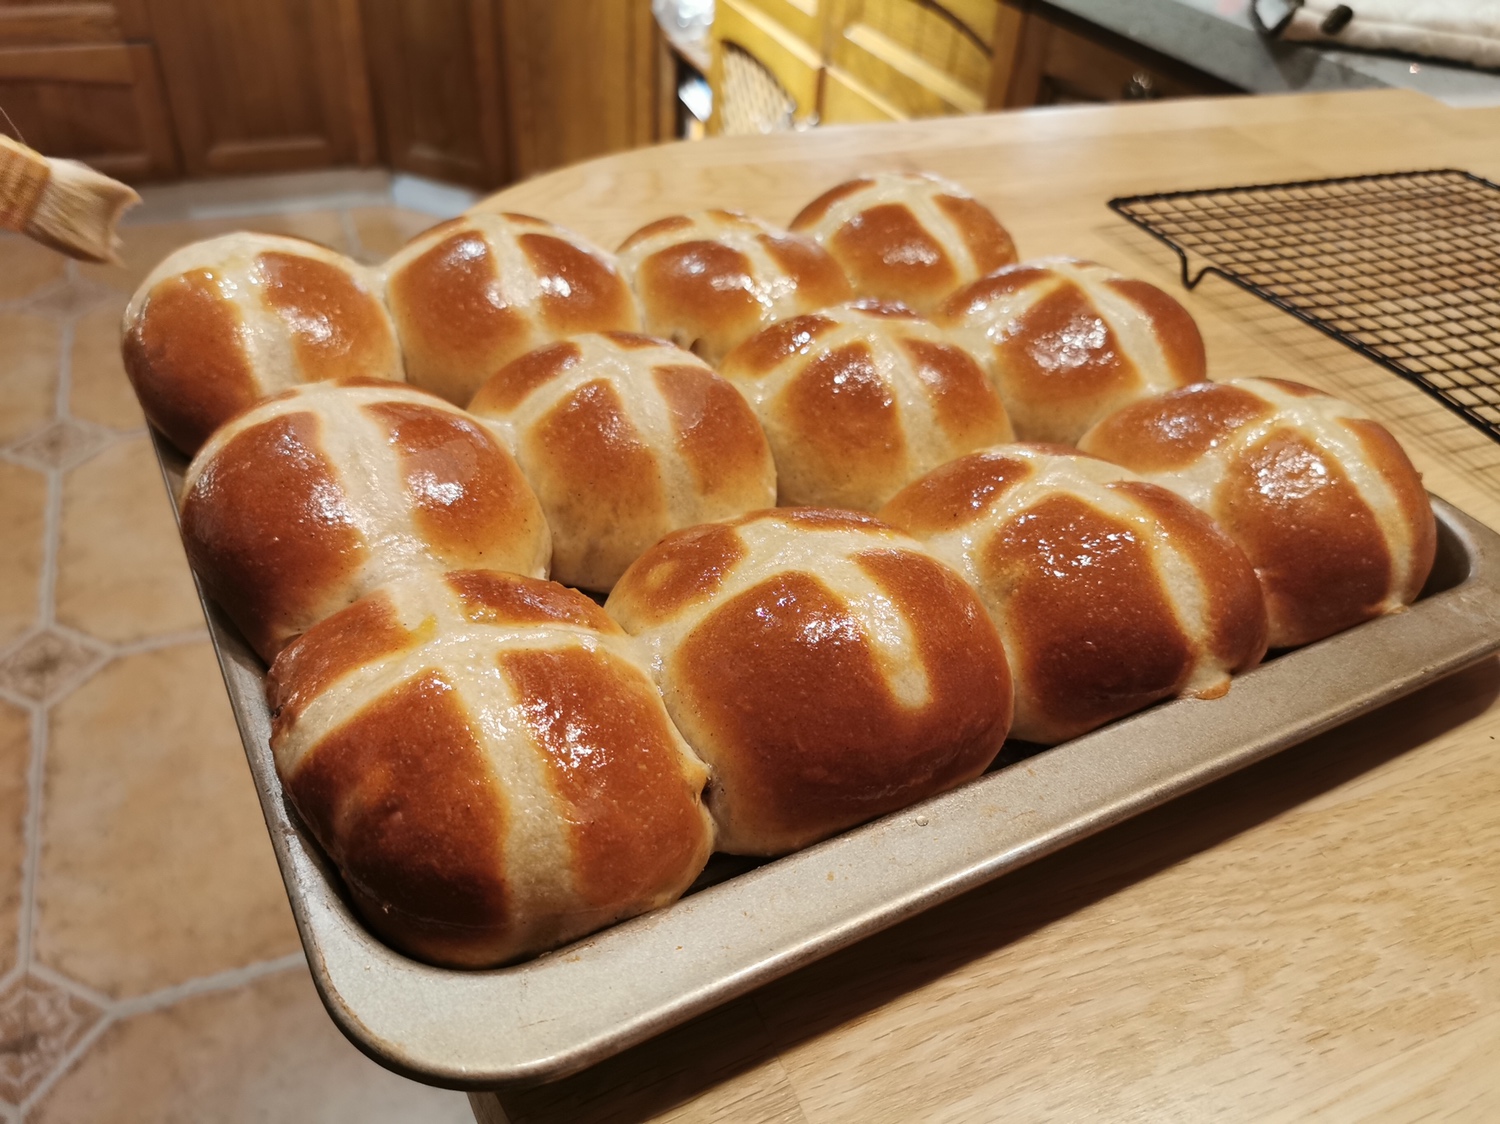 Hot Cross buns英国传统十字面包 复活节必备